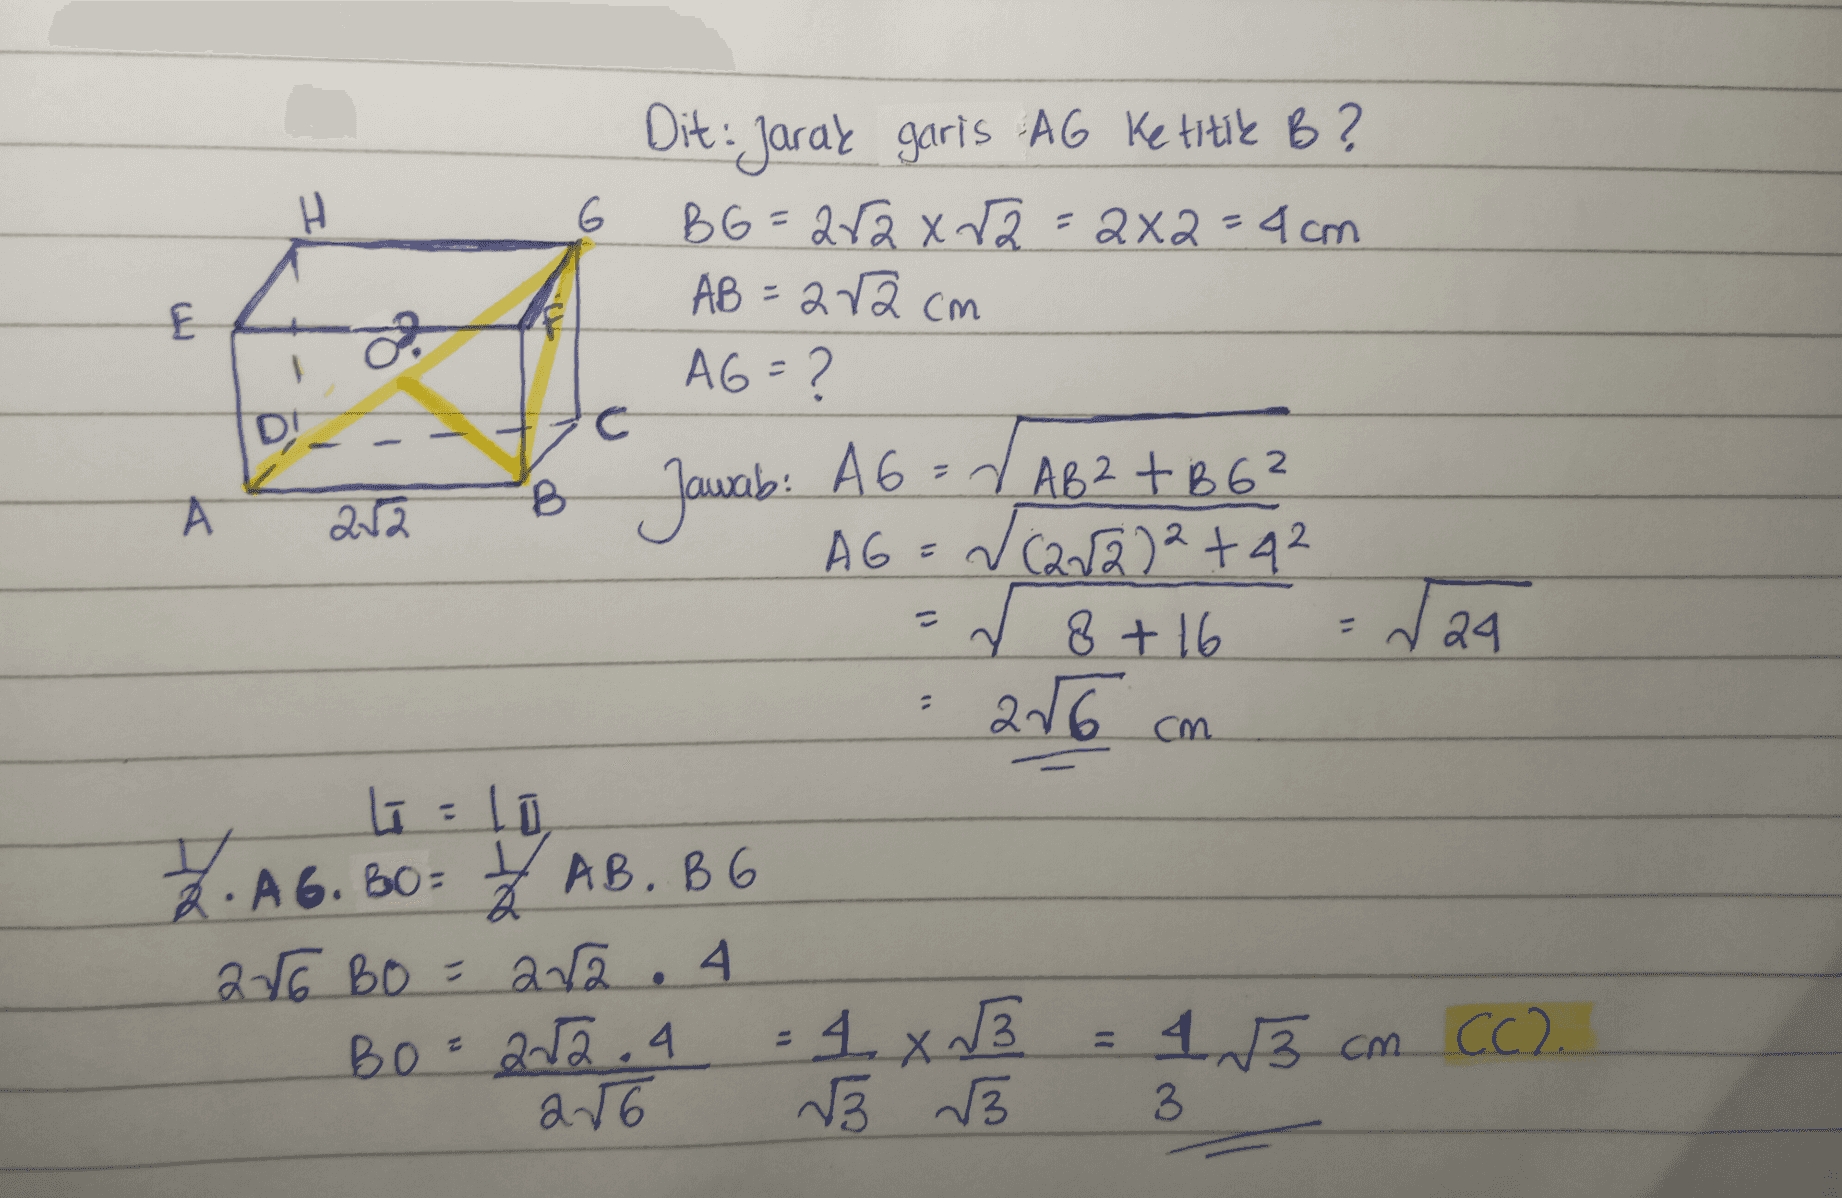 Dit: Jara; garis AG ke titik B ? BG=282x82=2x2=4 cm Р 6 E o DI С AB=212 cm A6 - ? A6= AG= √ (2/2)2 +4² r8+16 2 - 2 AB2 + B 6² А 212 Jawab: B J24 13 256 cm L = 11 .A 6. BO Z AB. B6 2r6 Bo=ar2.4 4. Bo=212.4 = 4 x ~3 ar6 3 43 cm CC2. . 3 